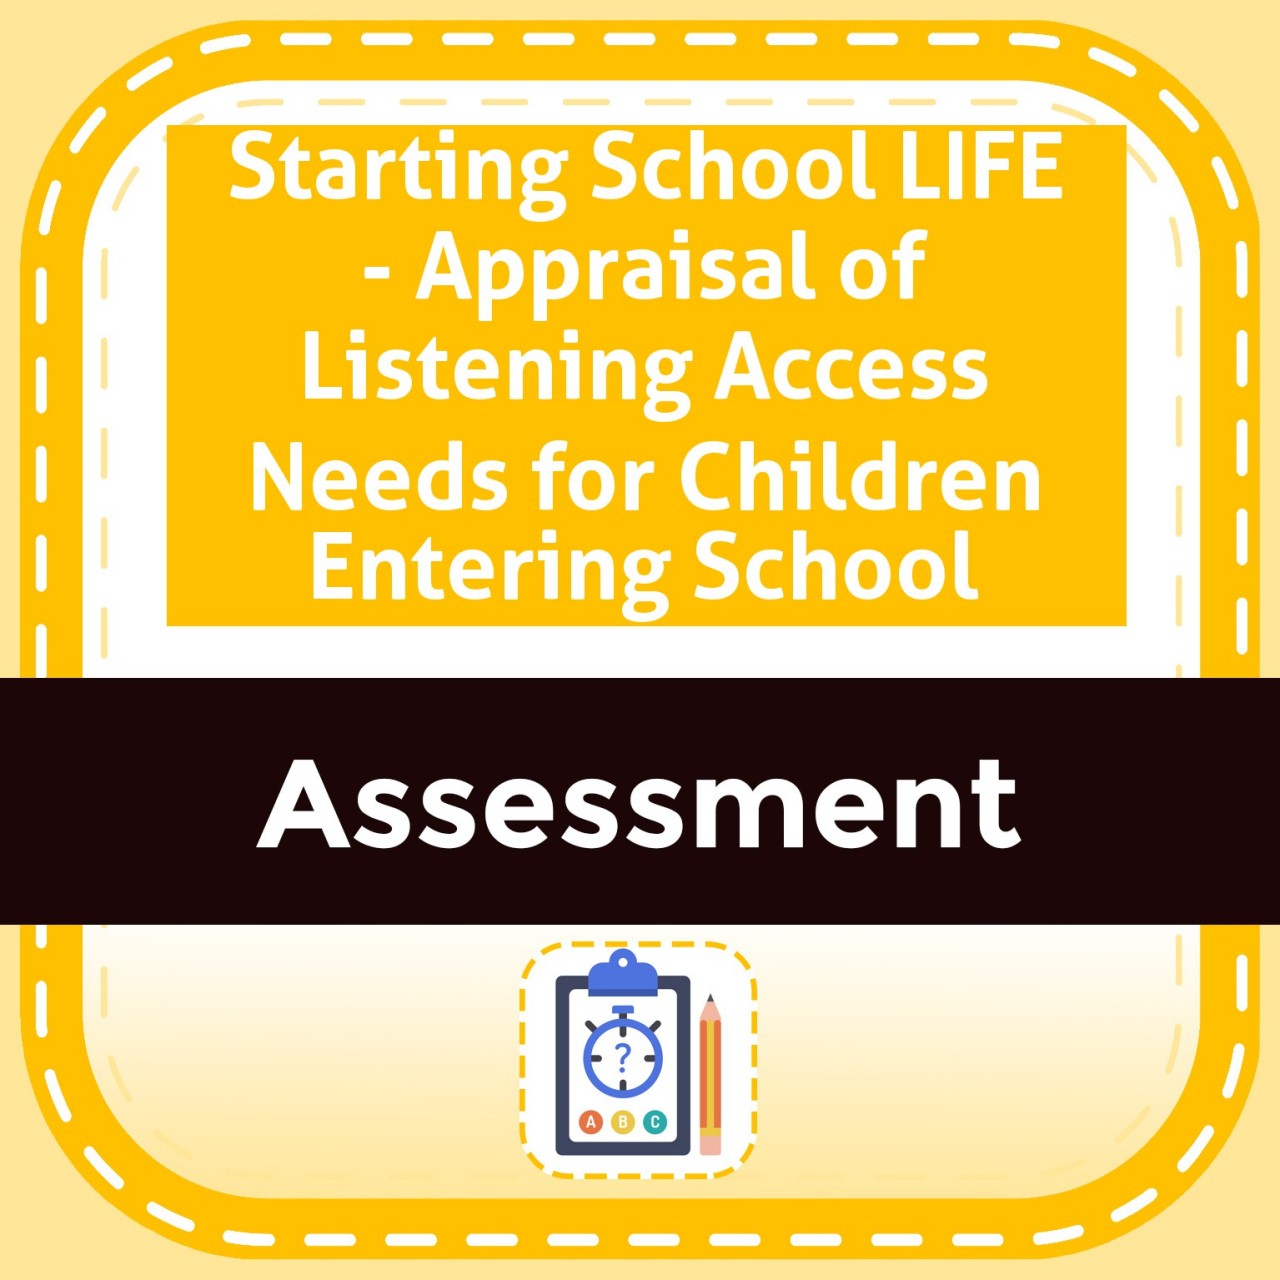 Starting School LIFE - Appraisal of Listening Access Needs for Children Entering School